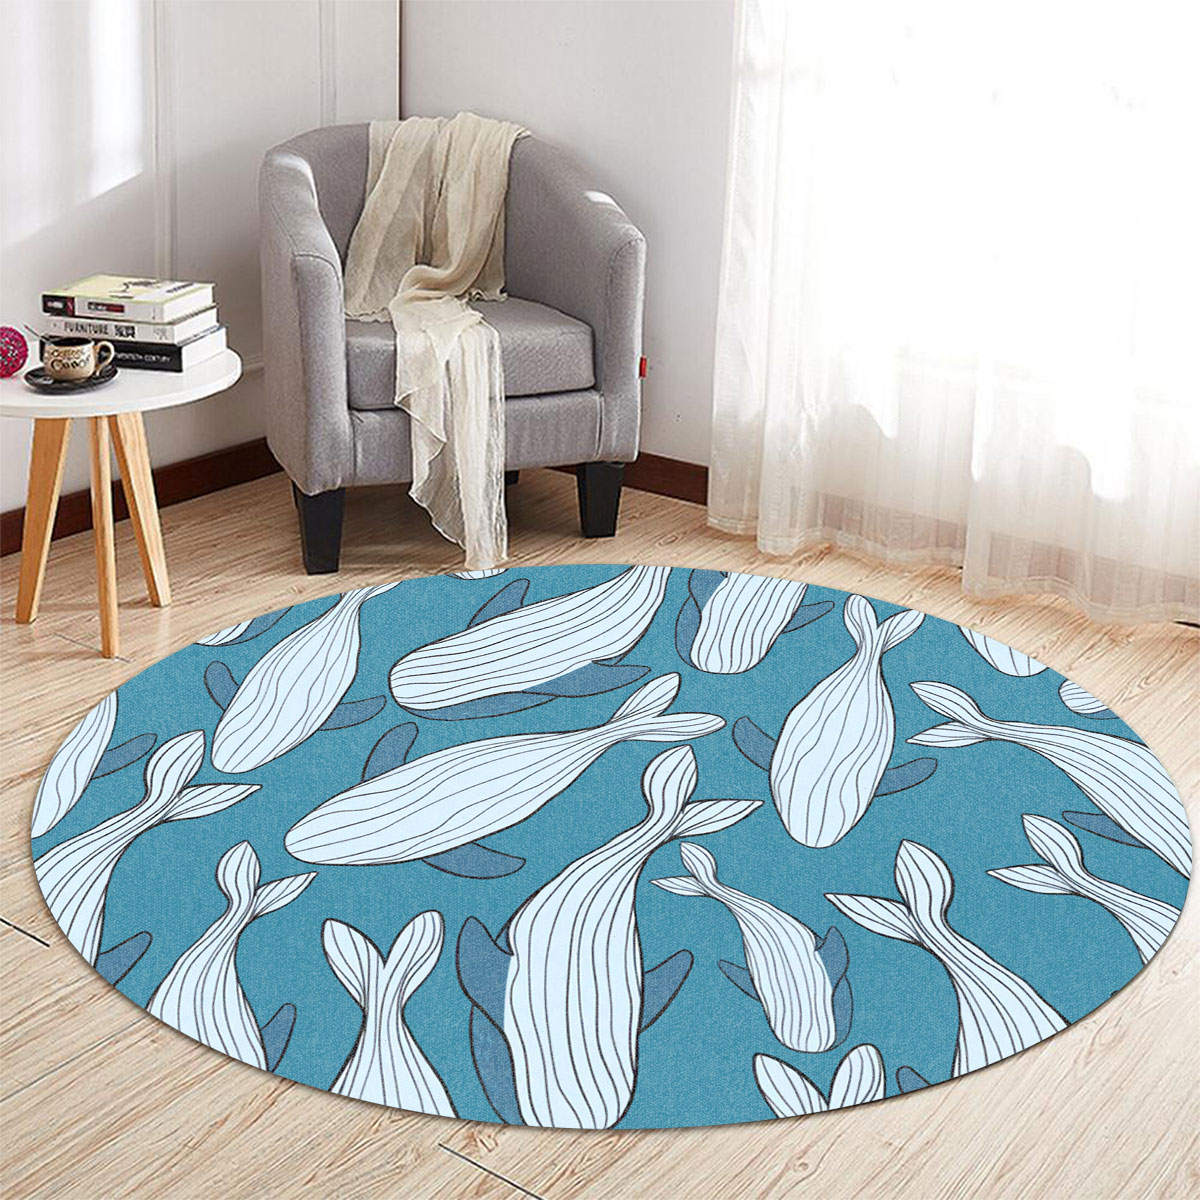 Family Blue Whale Round Carpet